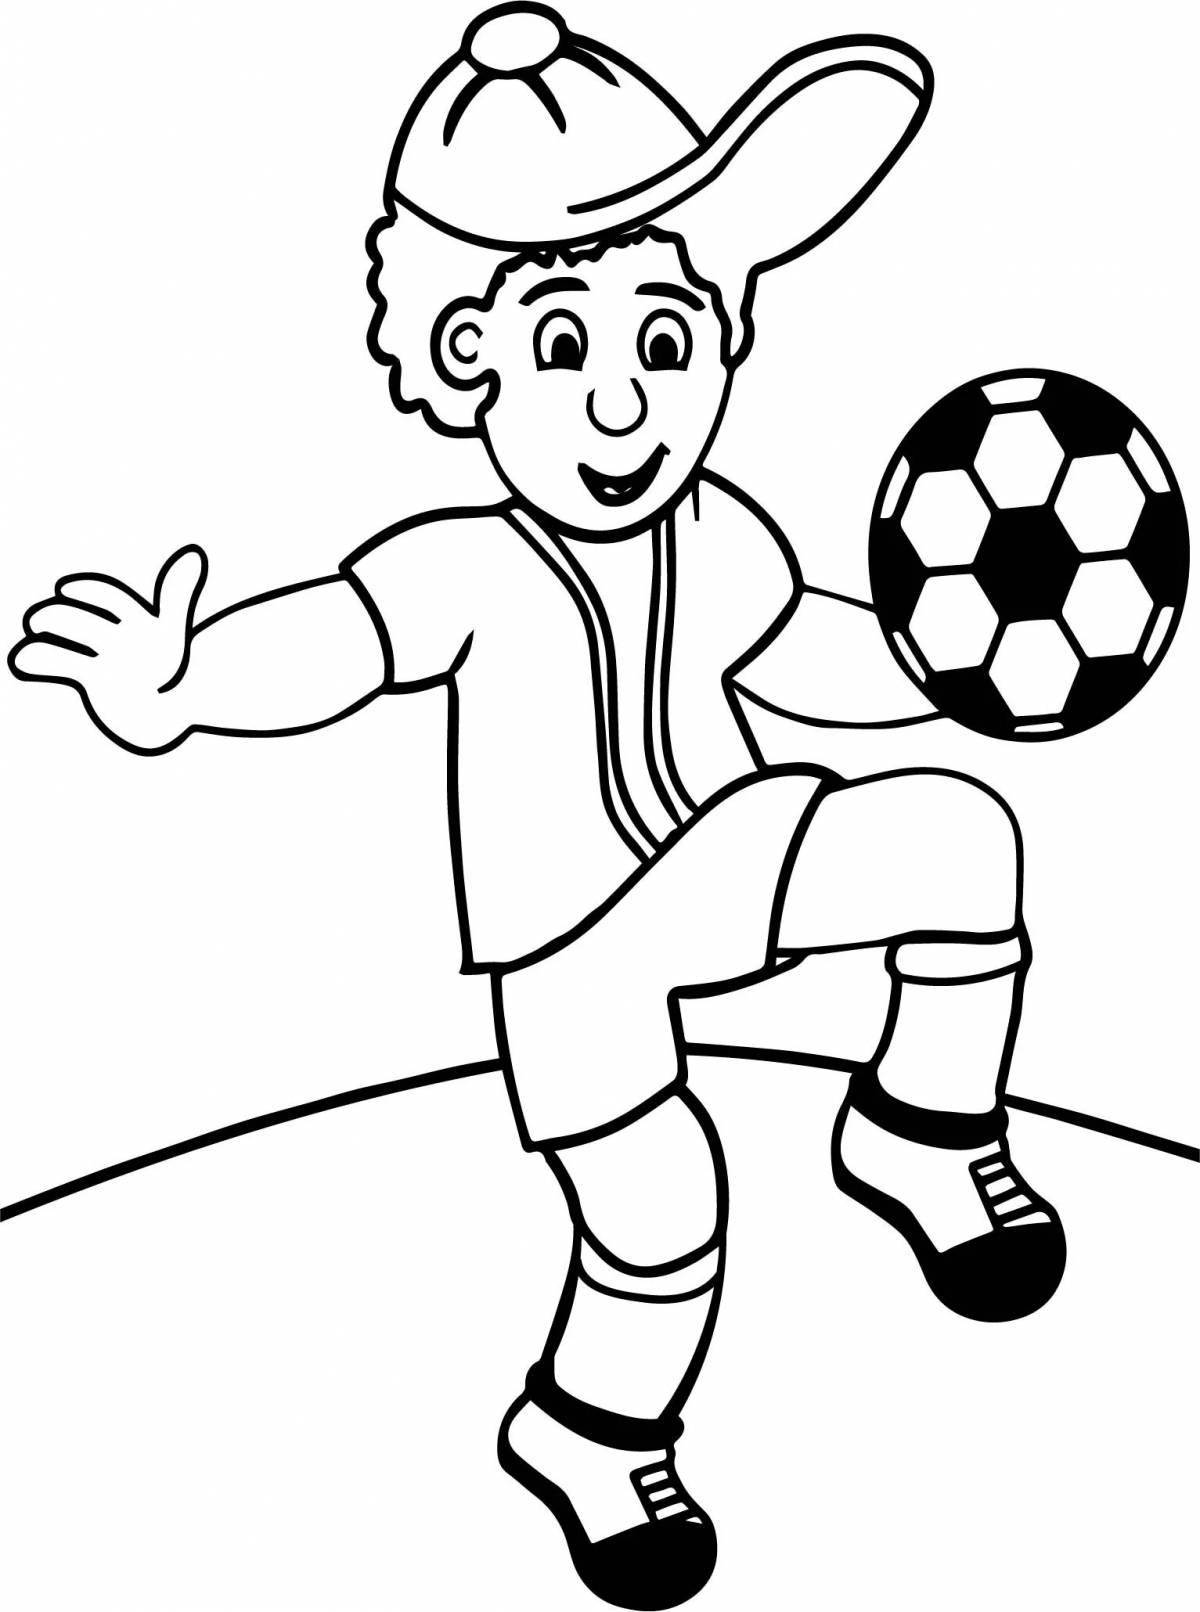 Violent soccer player coloring book for kids